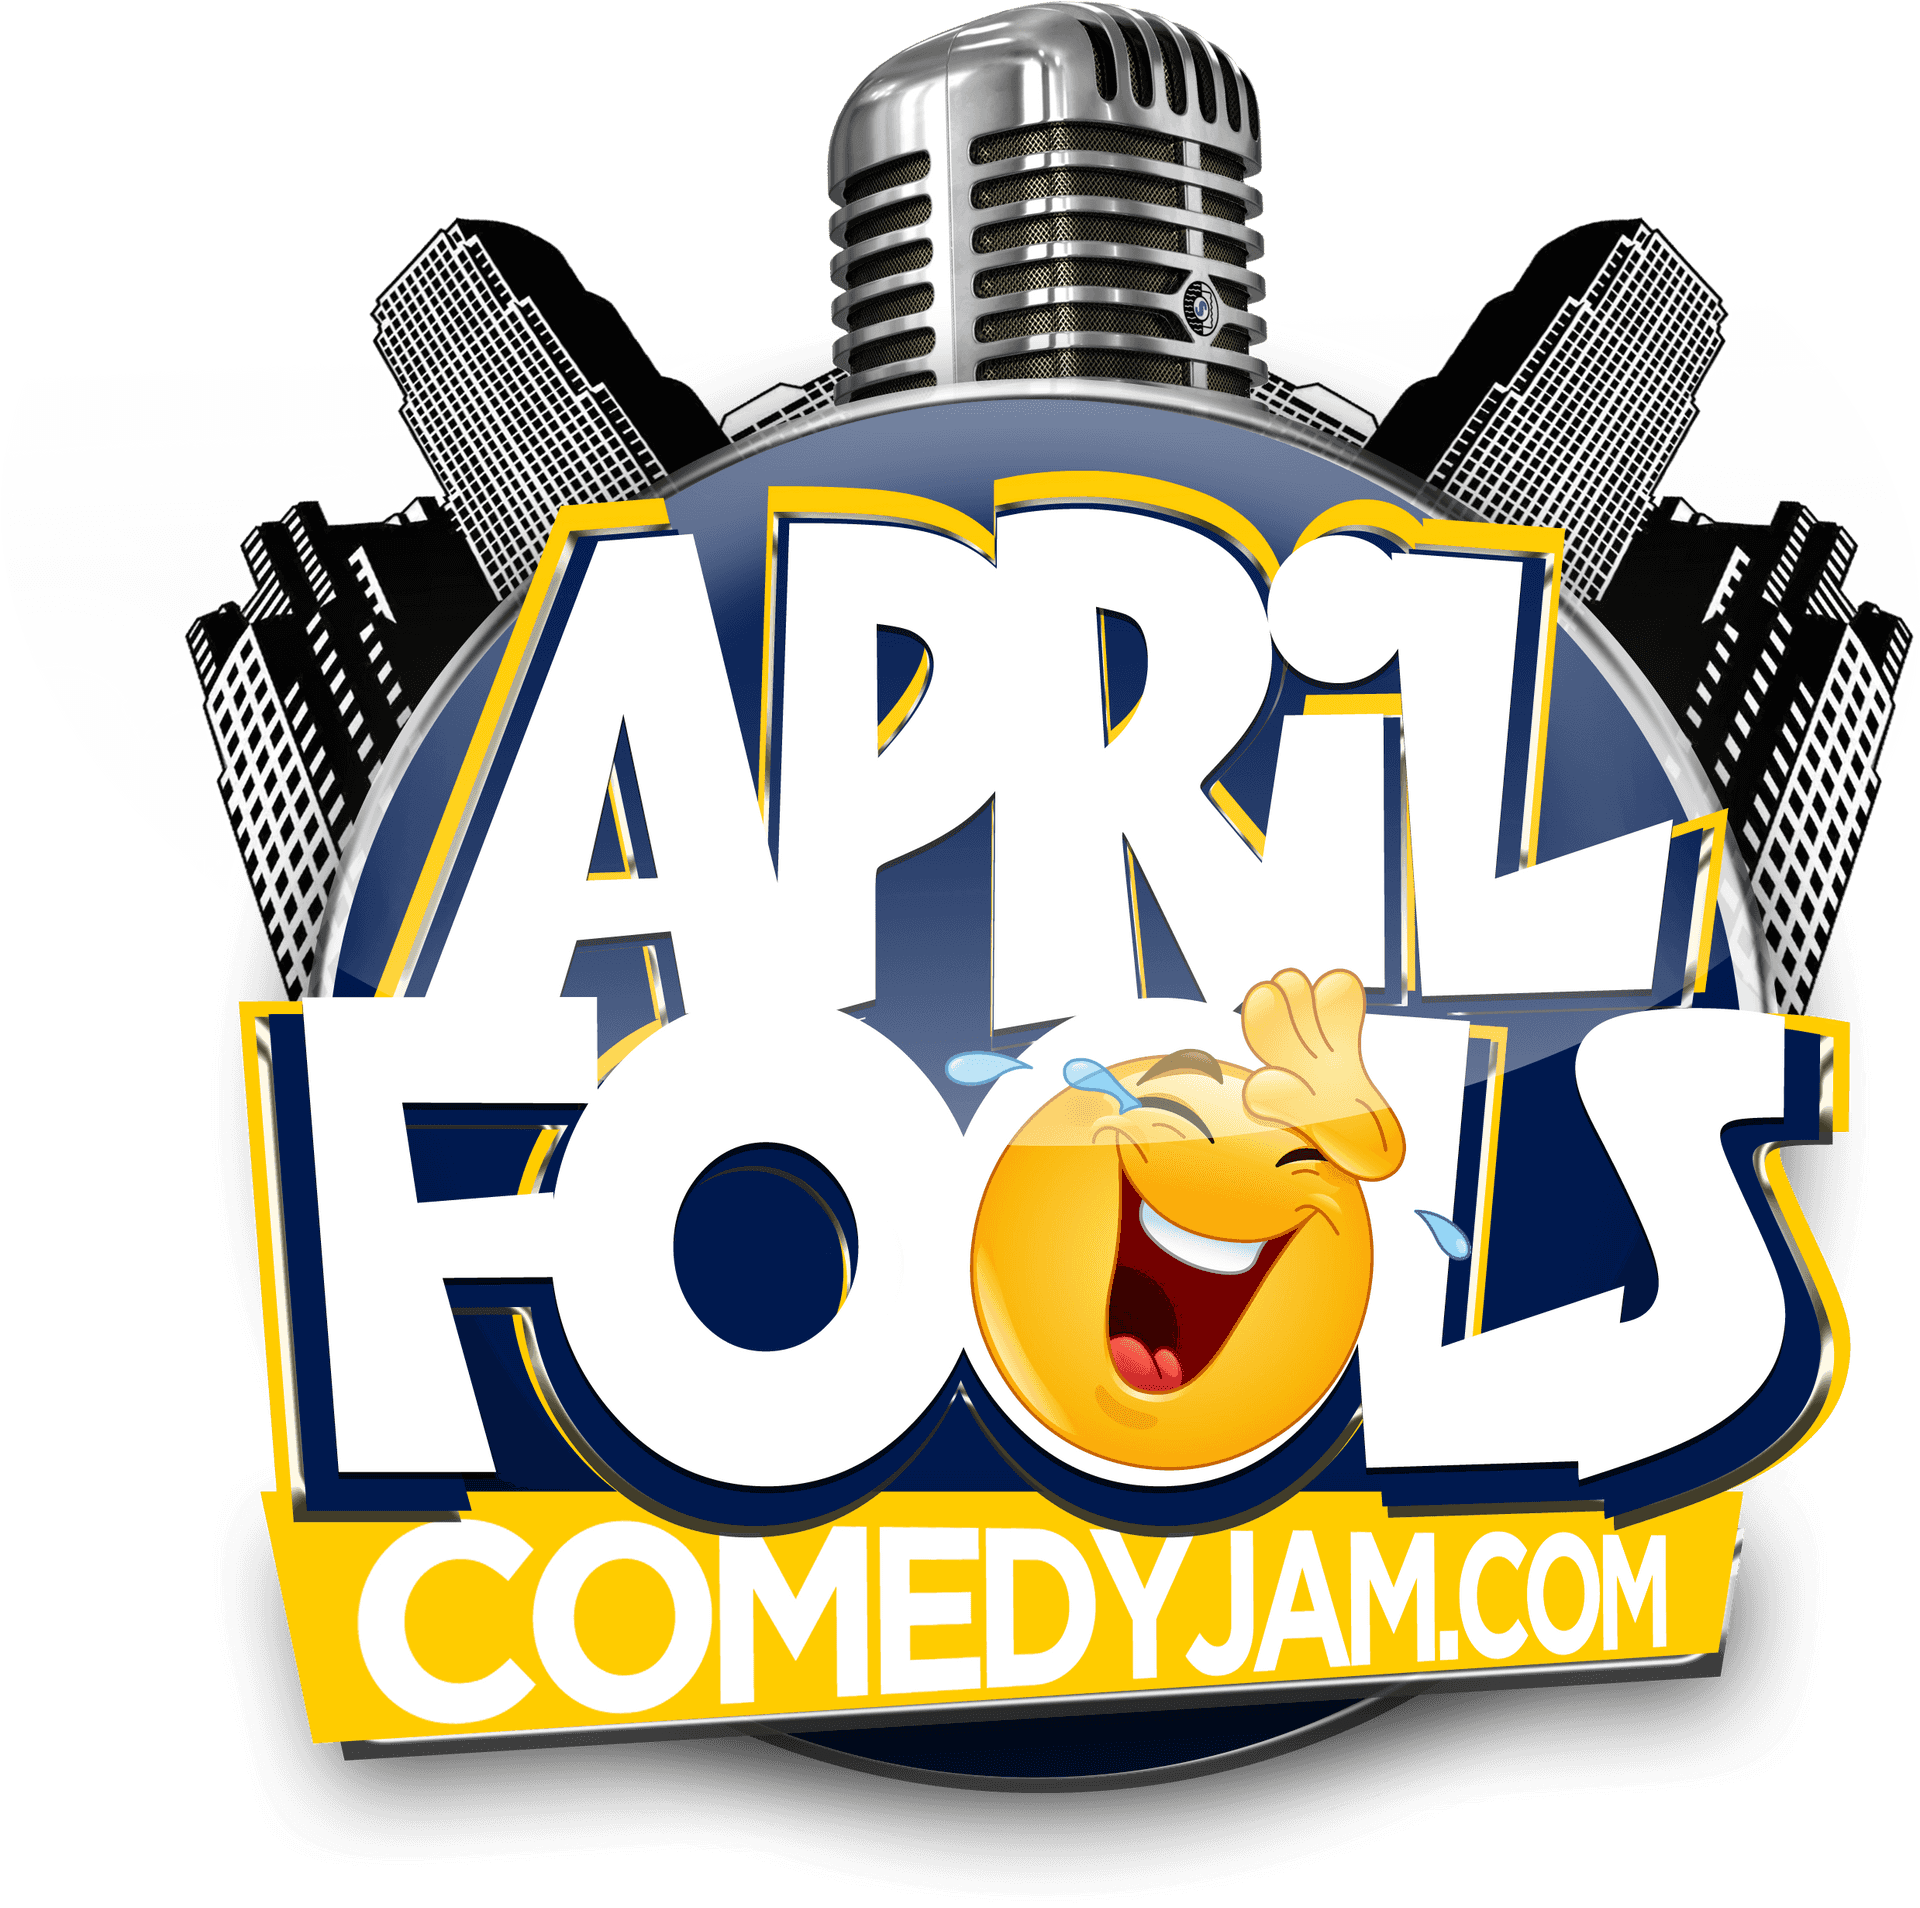 April Fools Comedy Jam Logo PNG image